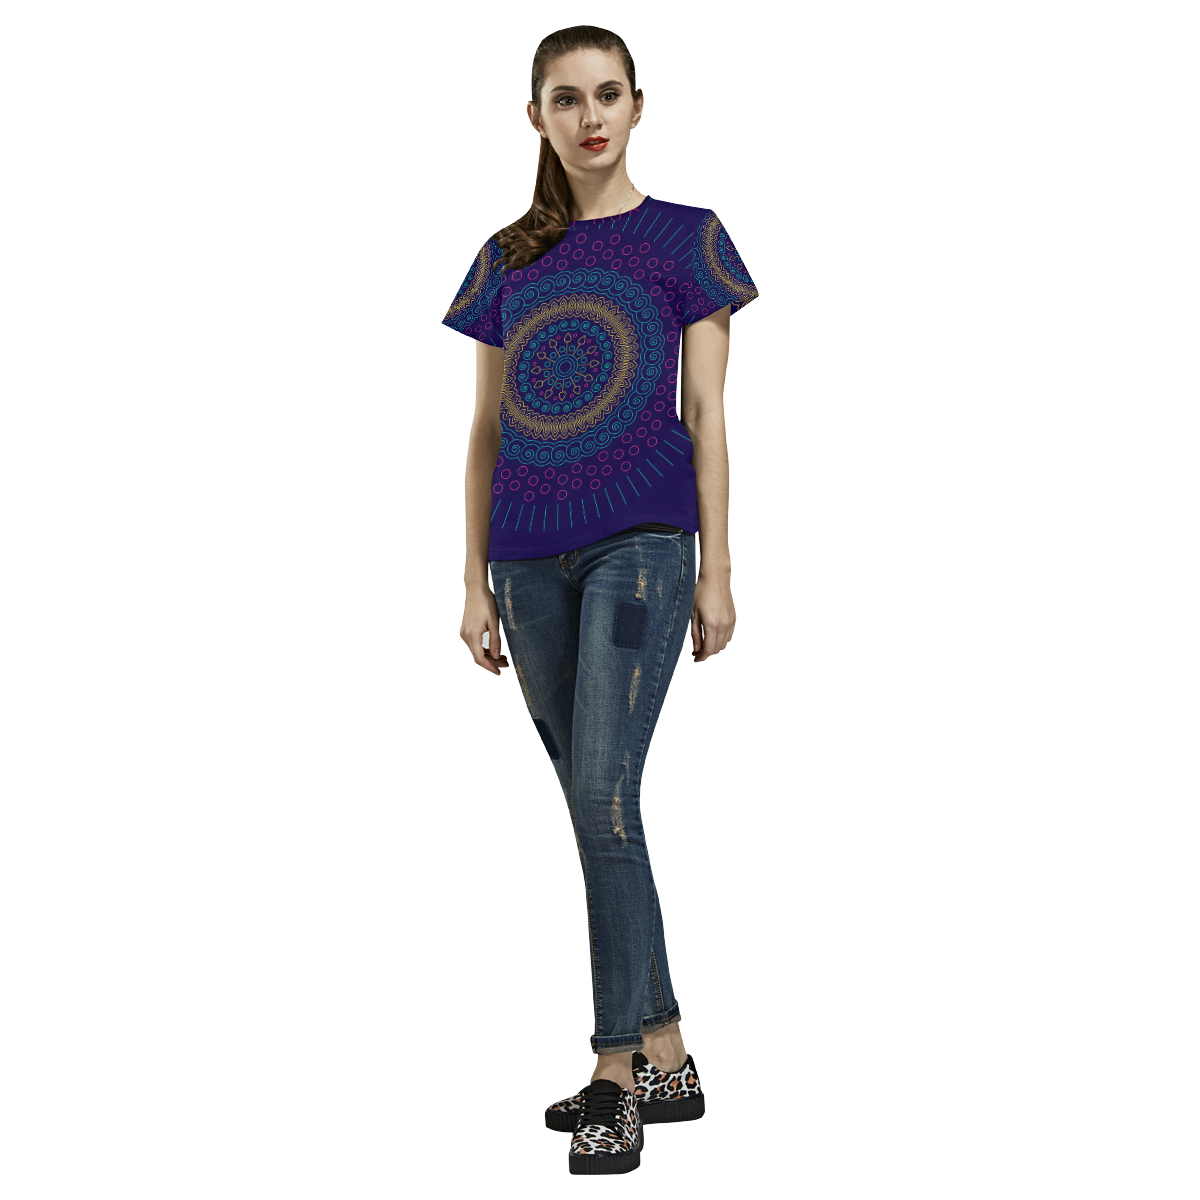 blue mandala circular All Over Print T-Shirt for Women (USA Size) (Model T40)